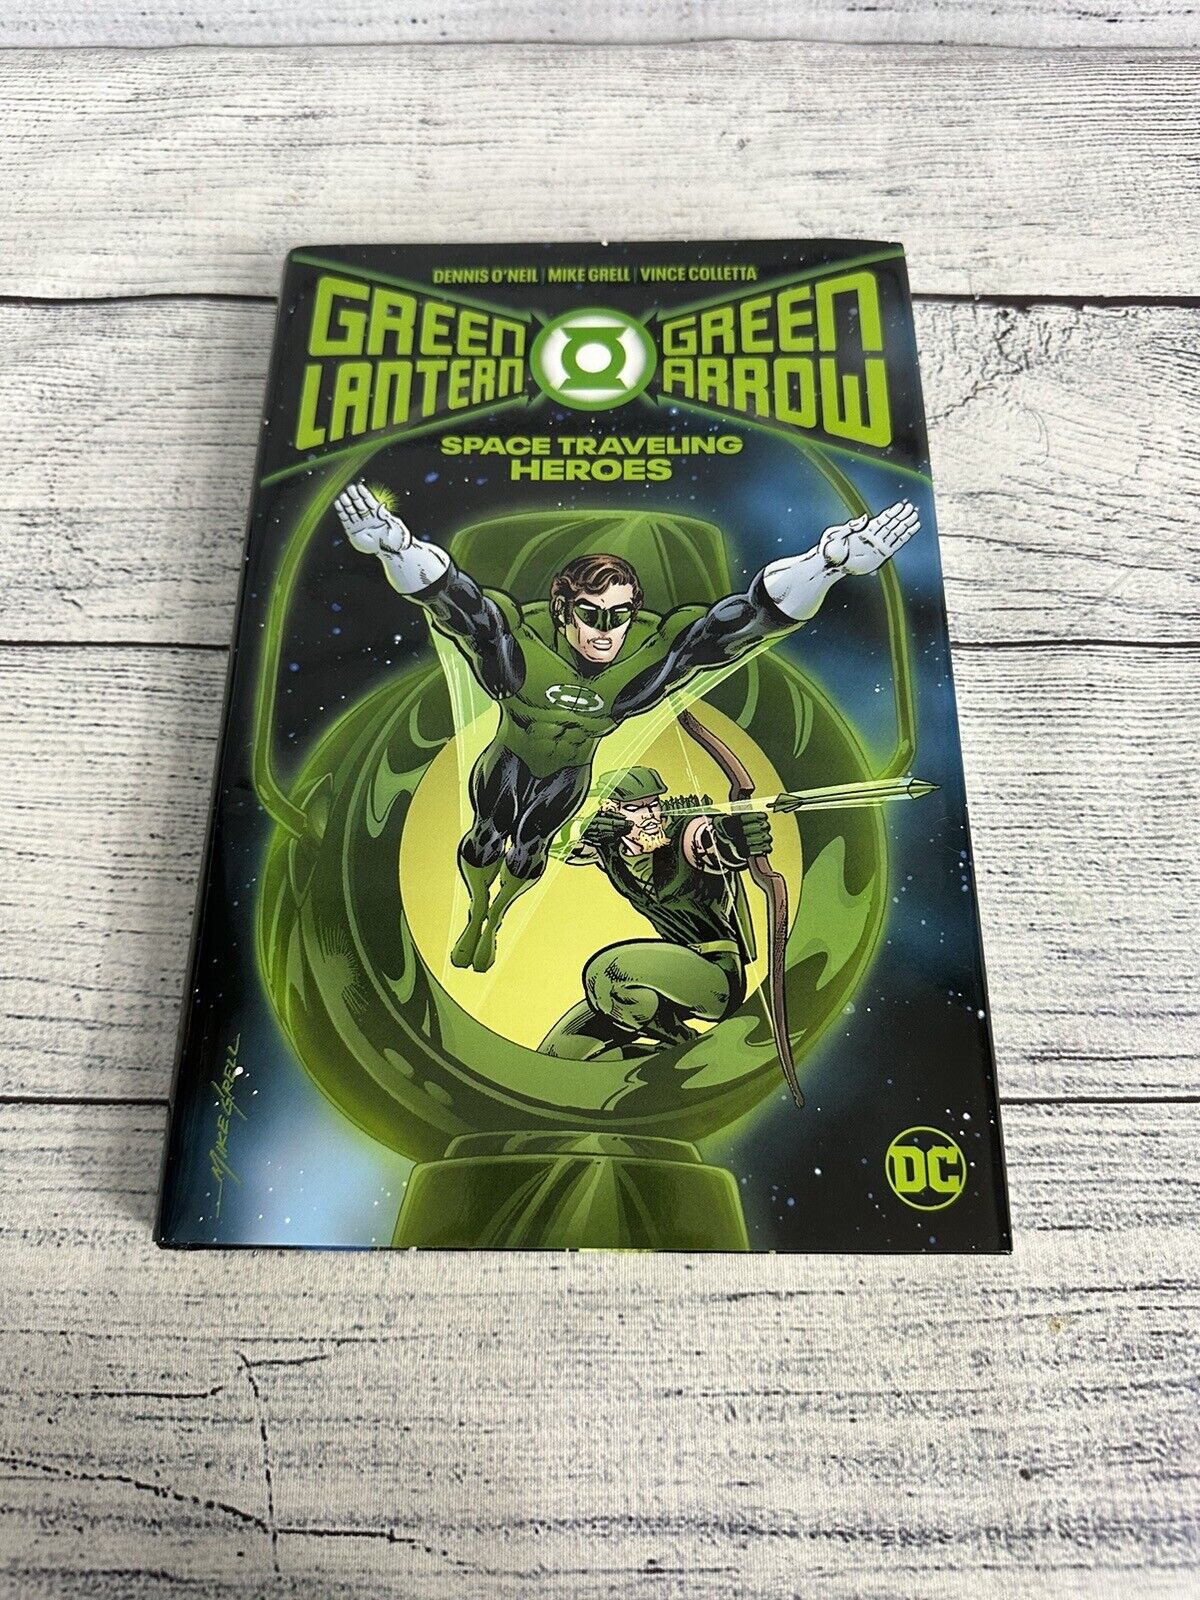 Green Lantern / Green Arrow: Space Traveling Heroes (DC Comics, September 2020)